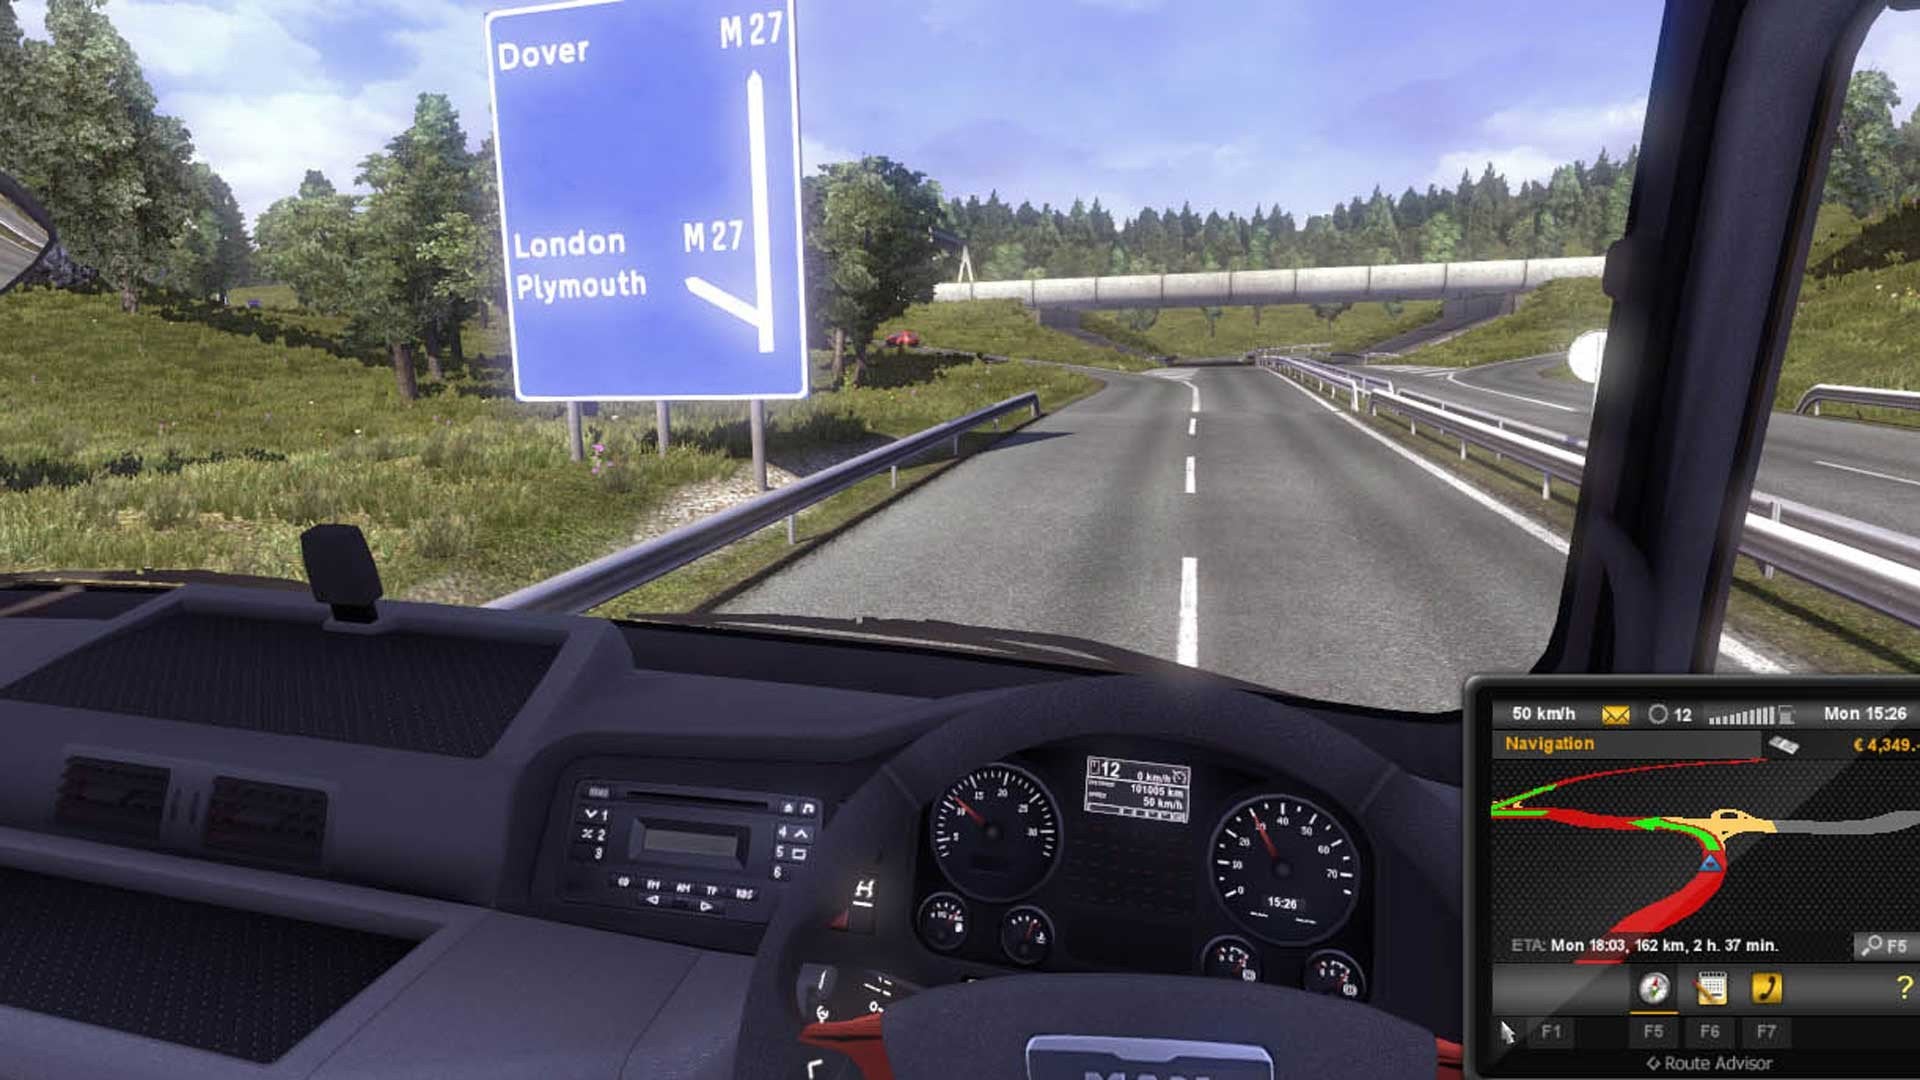 euro truck simulator 2 trainer fling